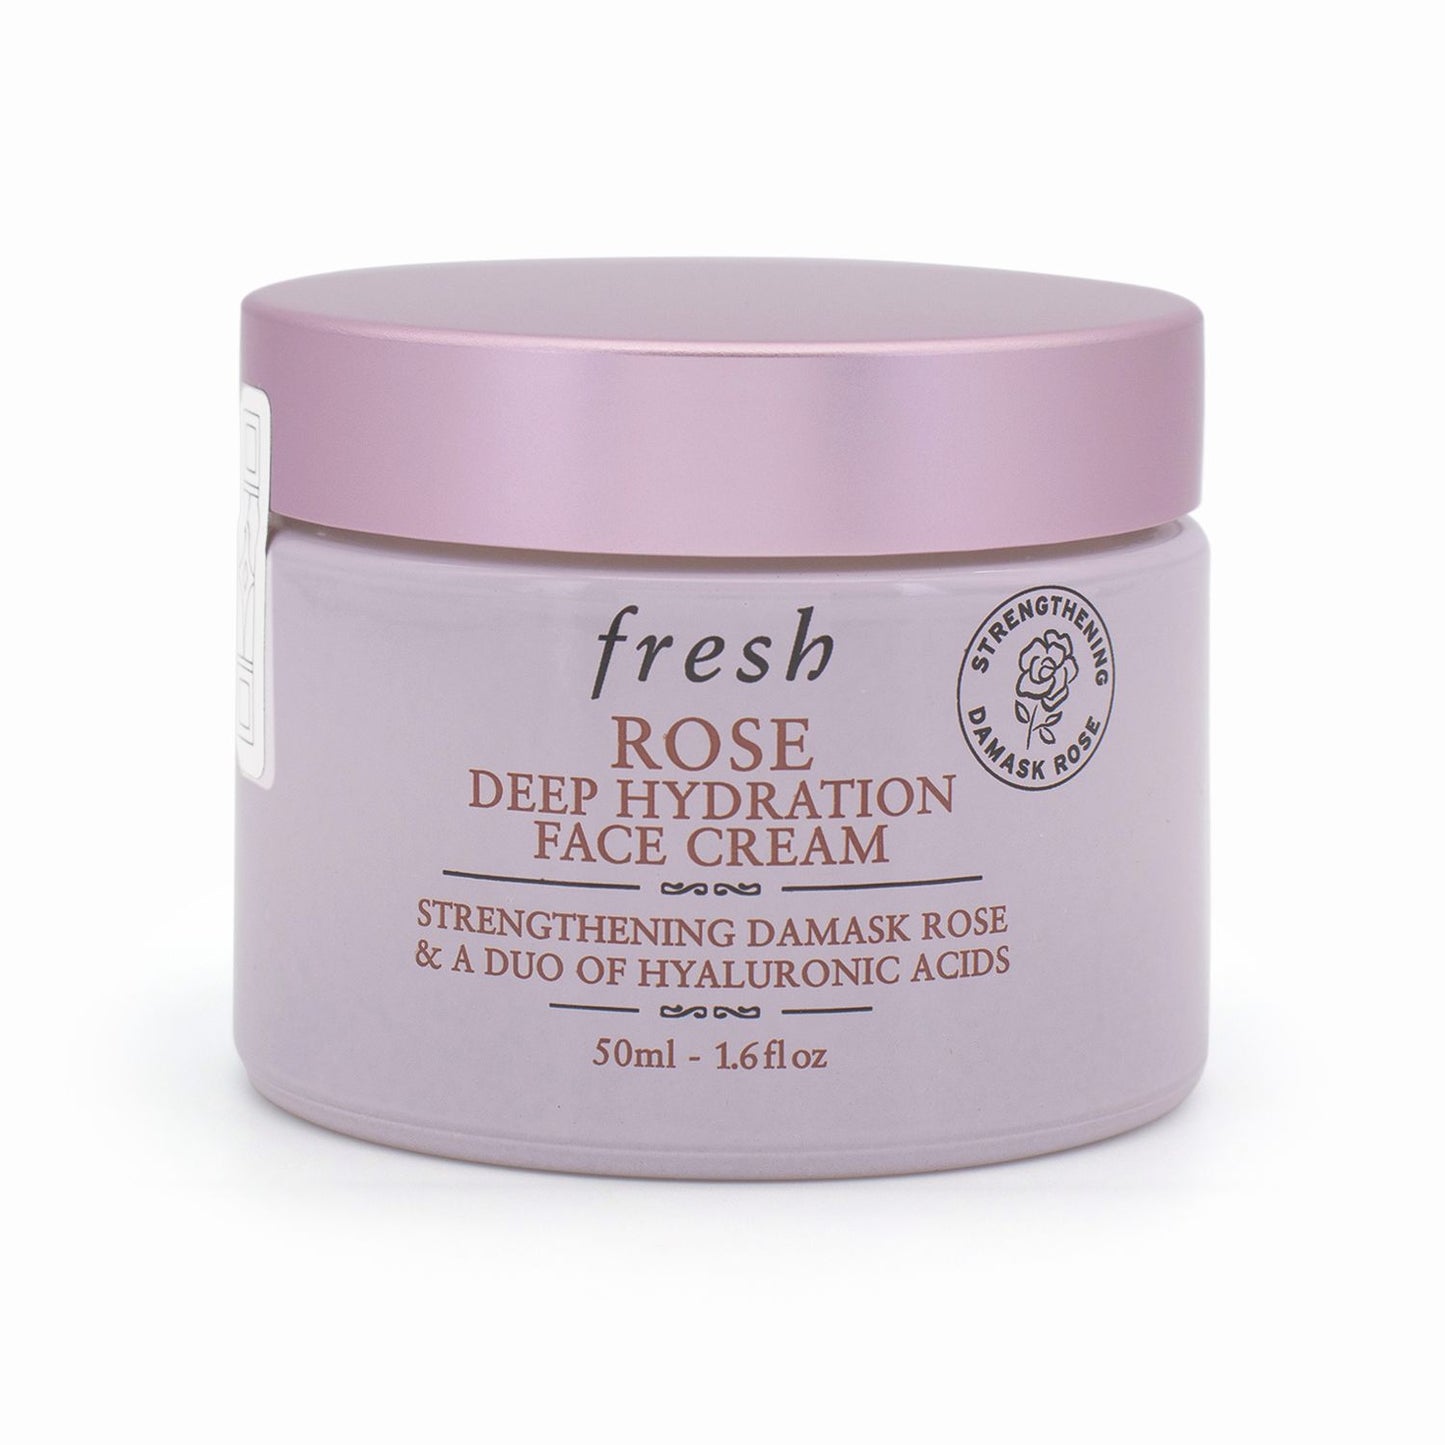 Fresh Rose Deep Hydration Face Cream 50ml - Missing Box